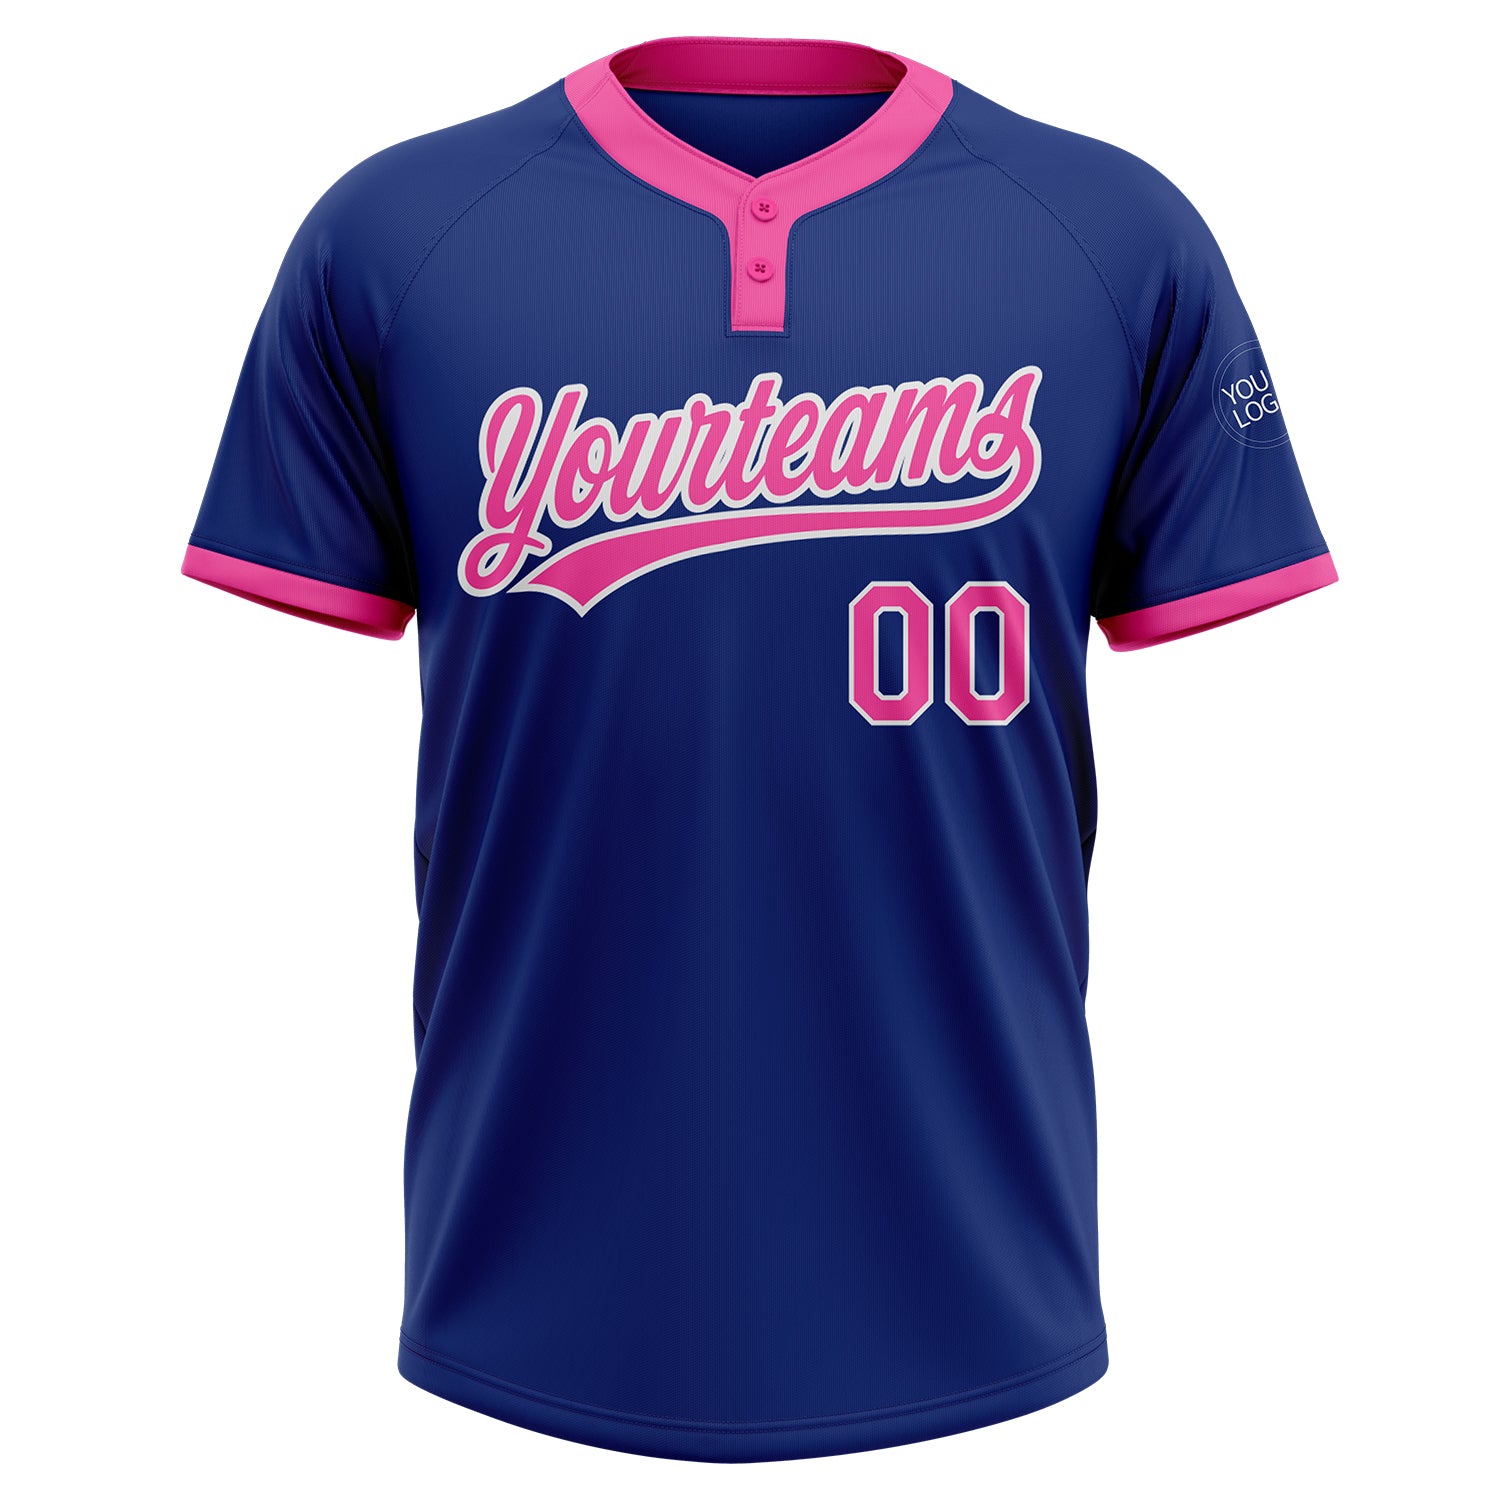 Custom Pink Light Blue-White Two-Button Unisex Softball Jersey Women's Size:S